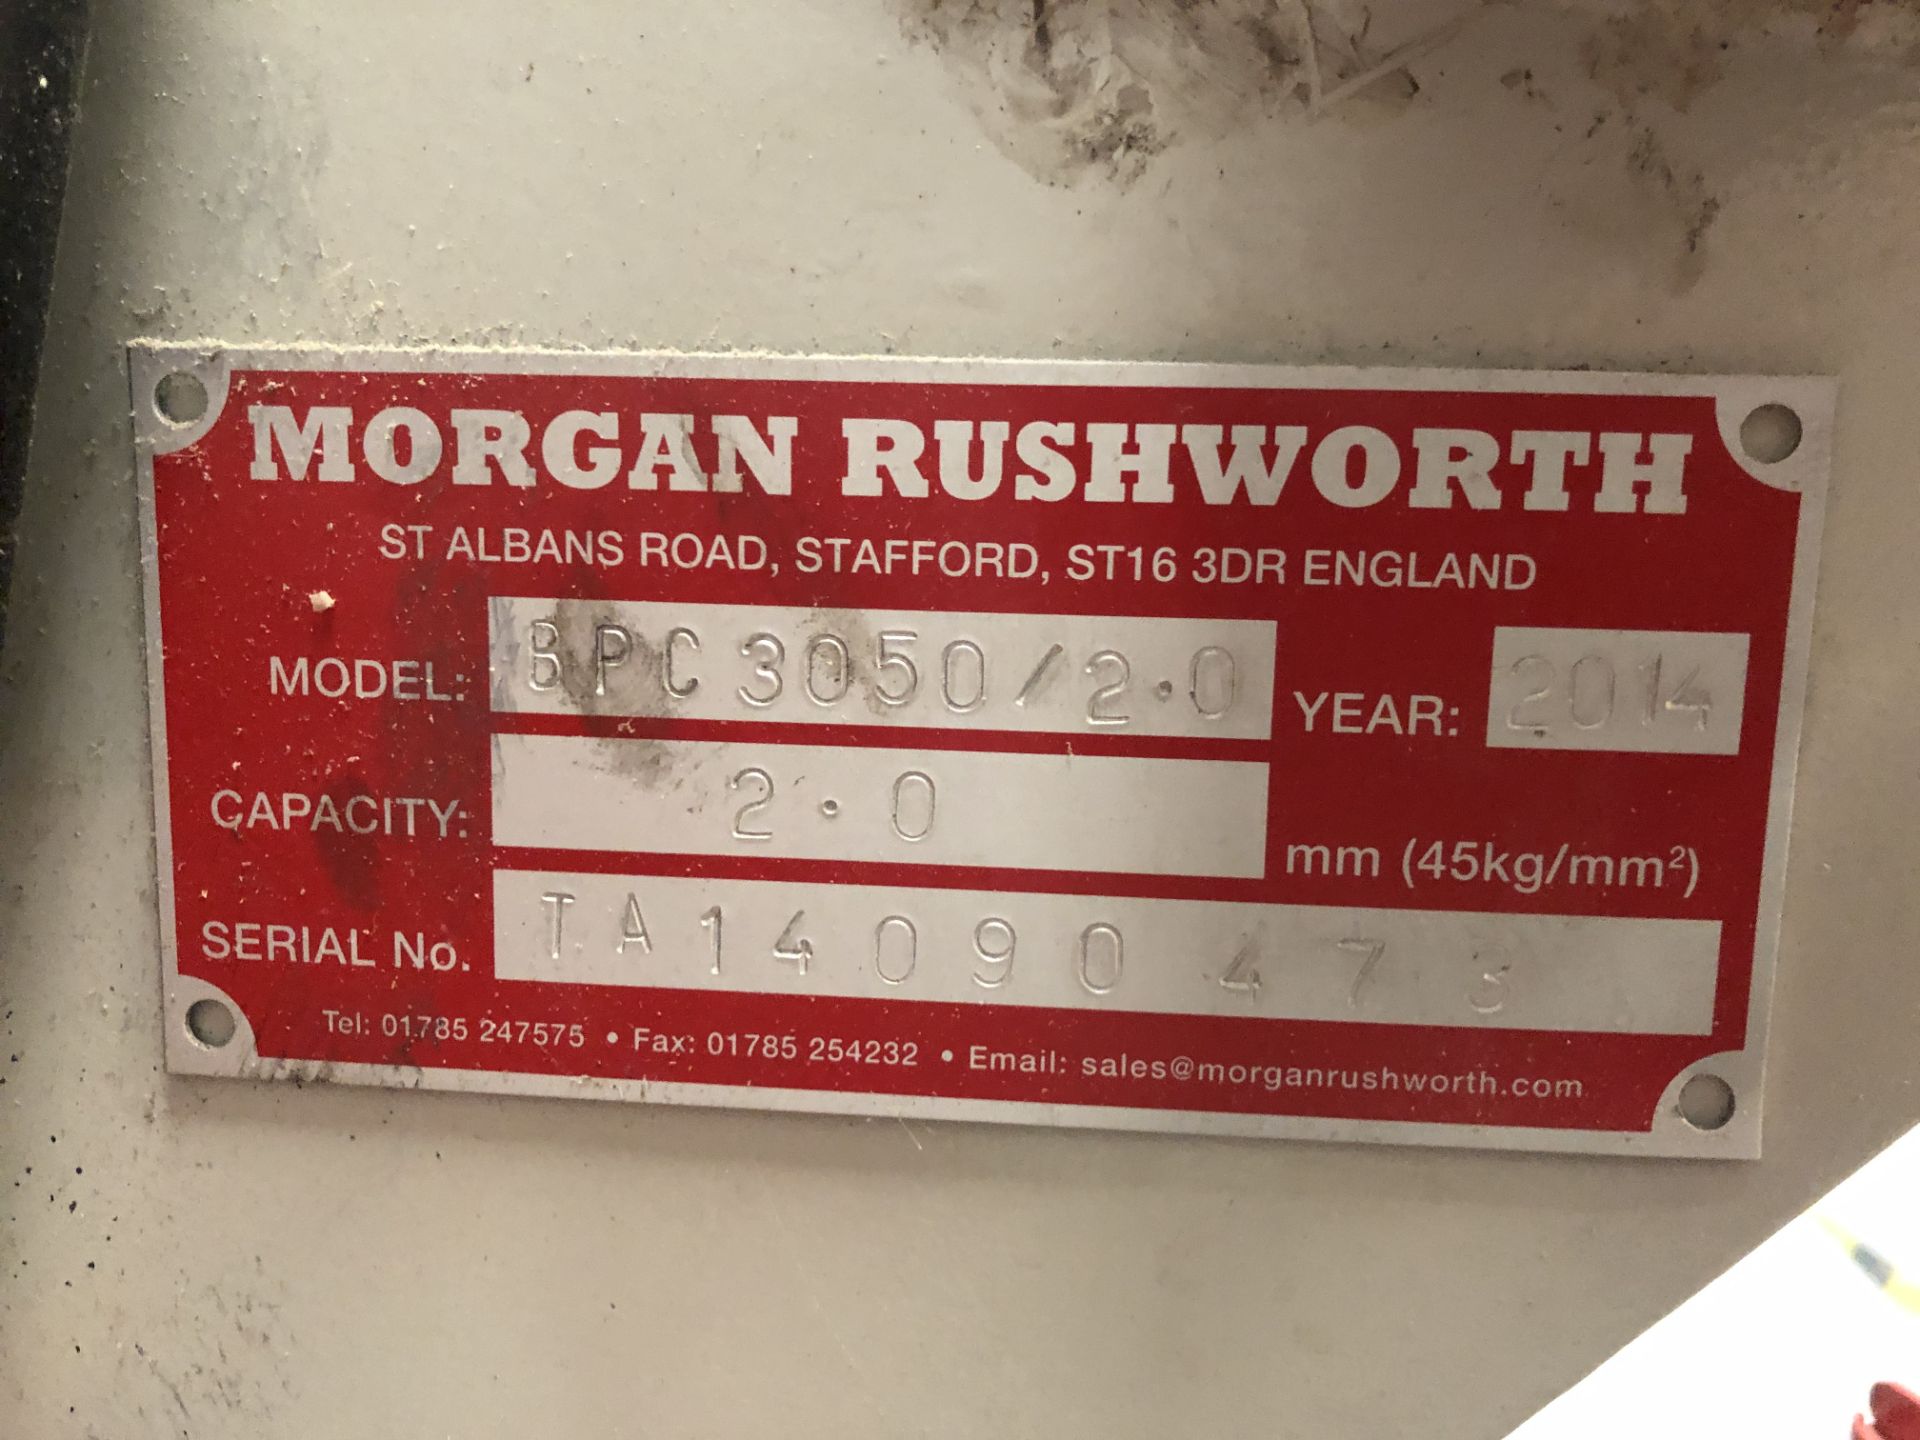 Morgan Rushworth BPC 3050/2.0, Box & Pan Folder, Serial No. TA14090473 (2014) - Note: Machine - Image 9 of 10